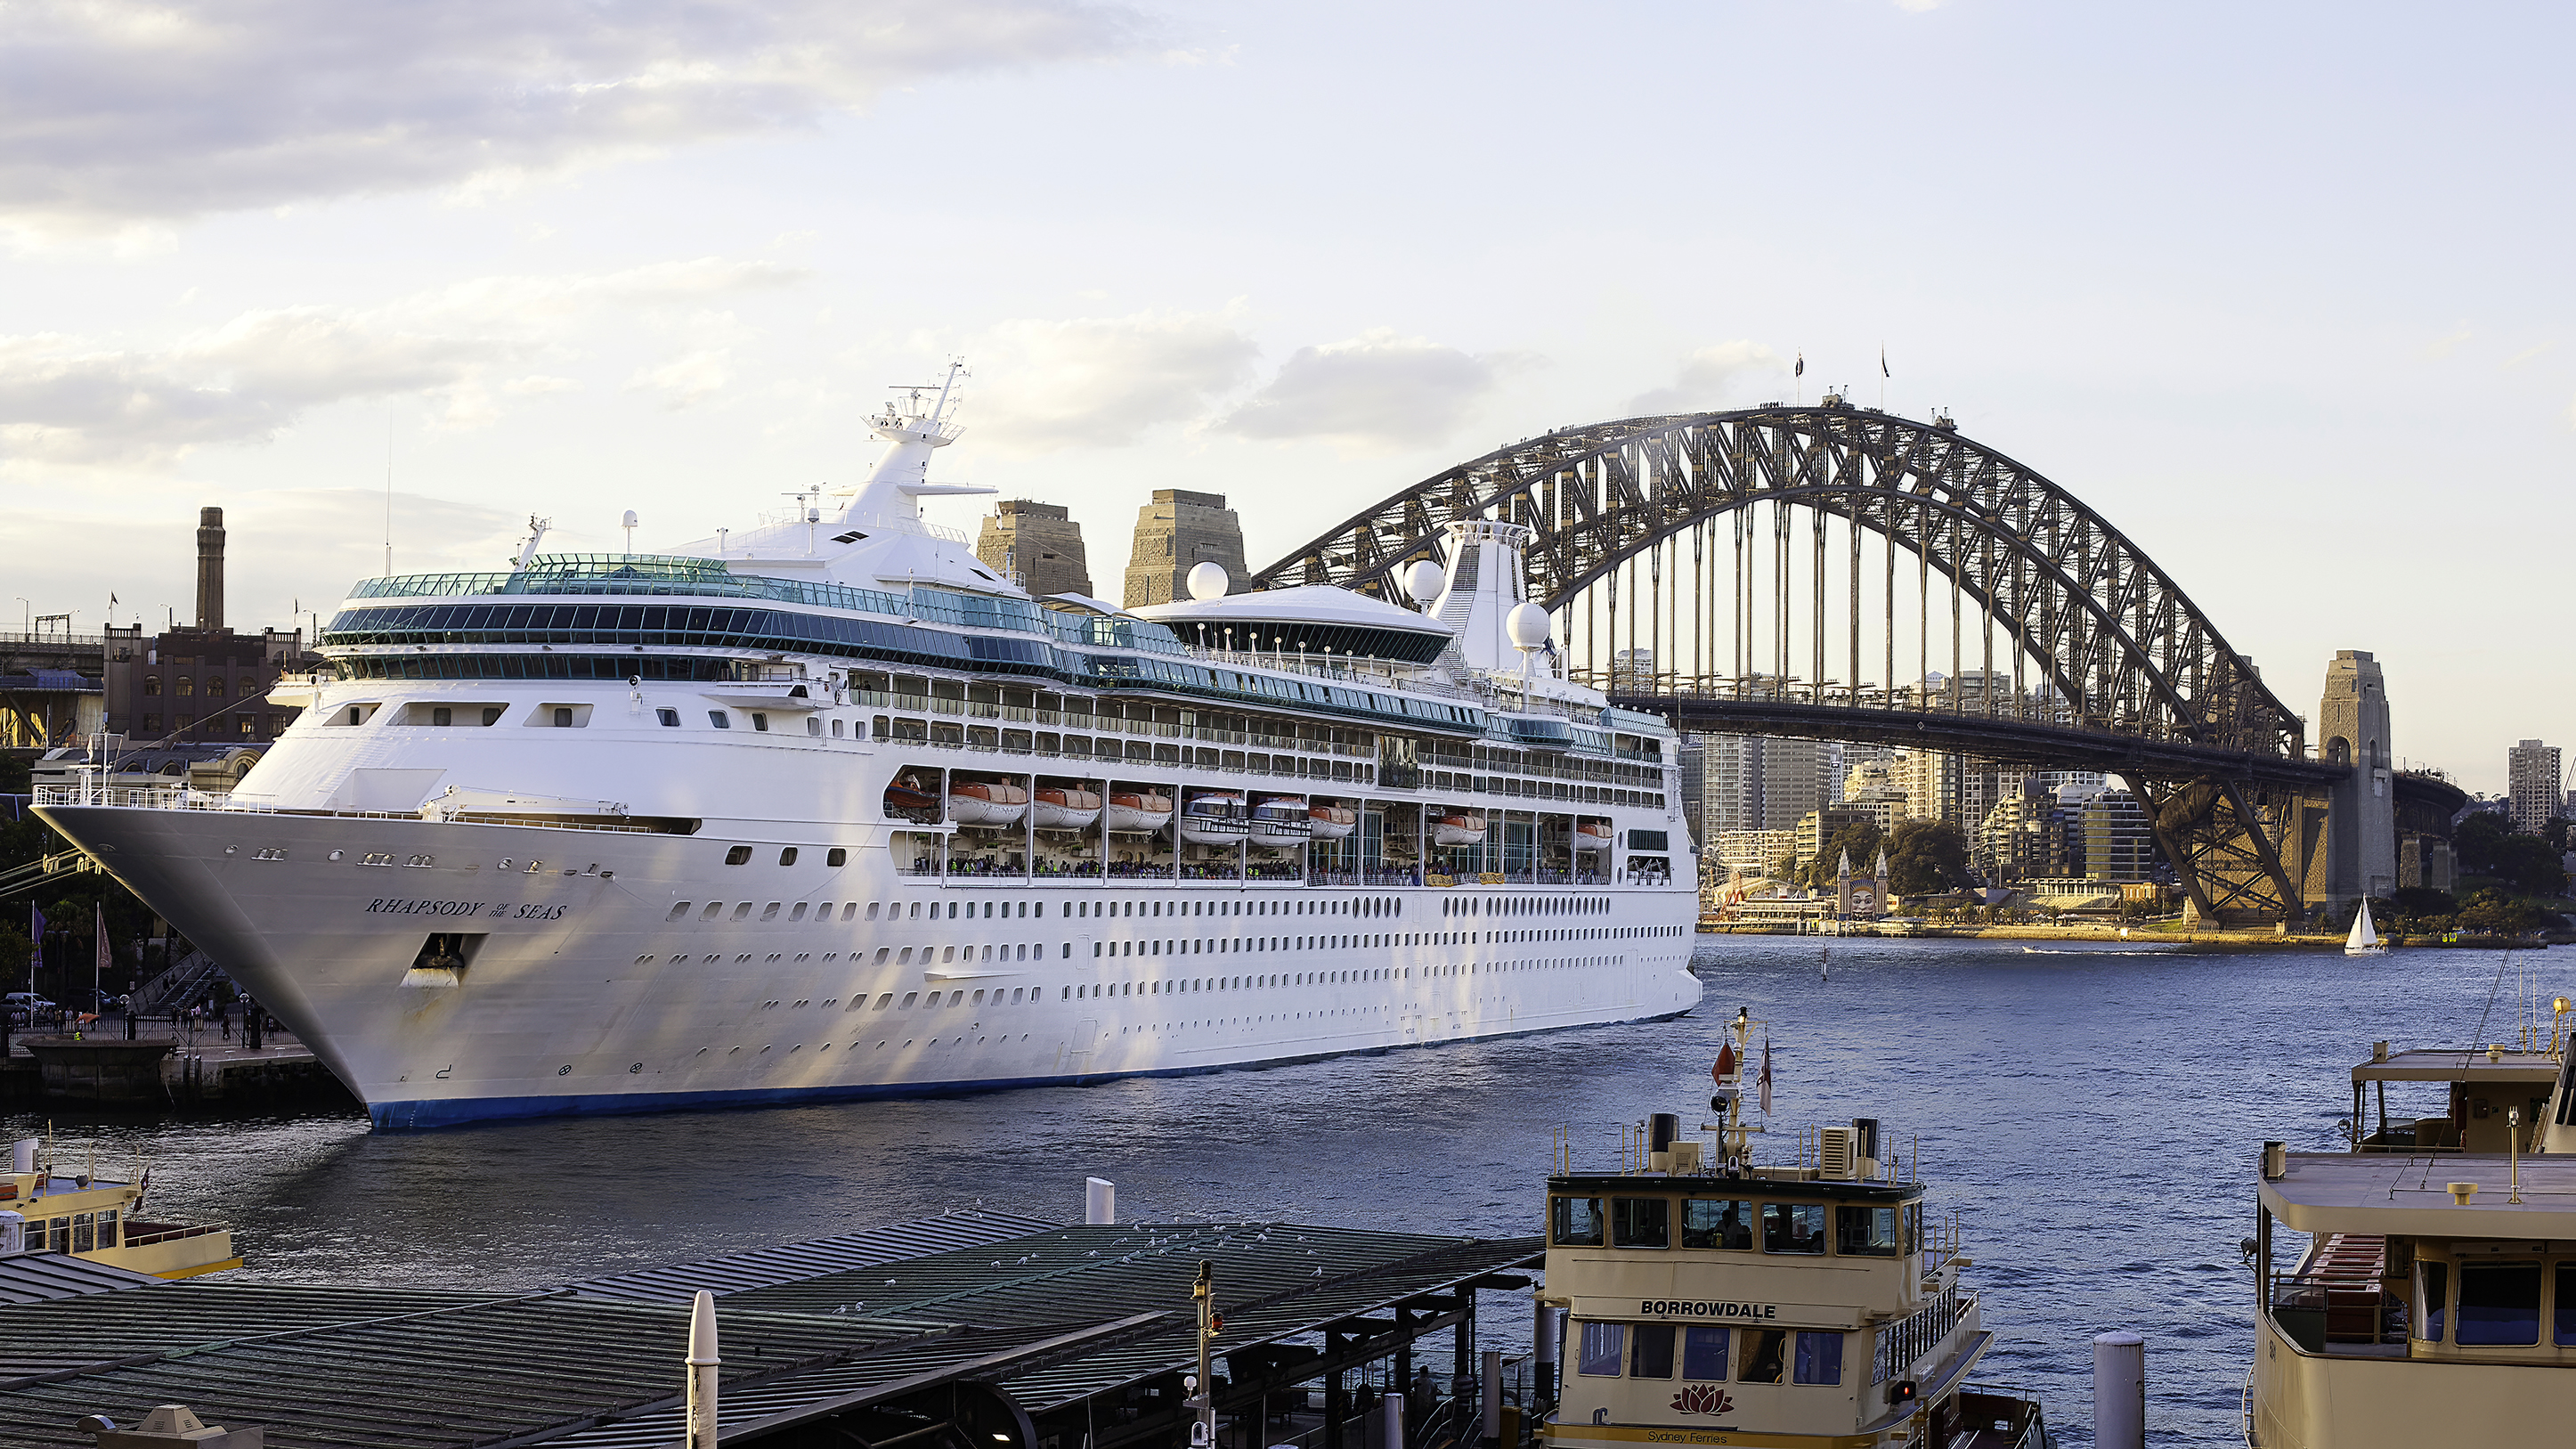 Iconic cities Sydney Circular Quay Cruise Ship Rhapsody of the Seas IMO 9116864 May 2014 01